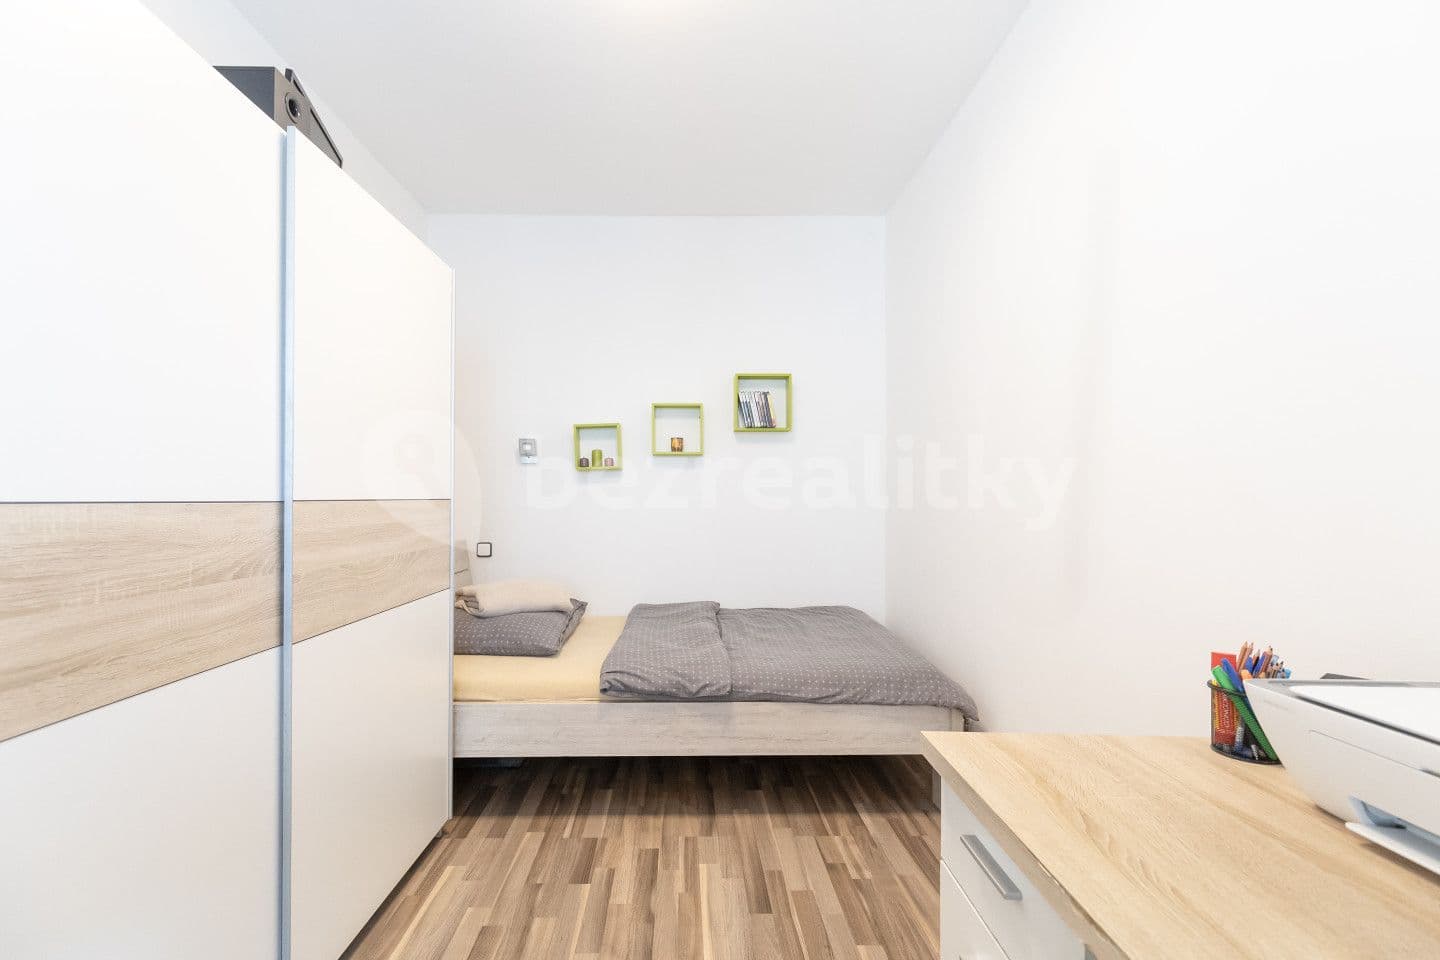 4 bedroom with open-plan kitchen flat for sale, 139 m², Mankovice, Moravskoslezský Region